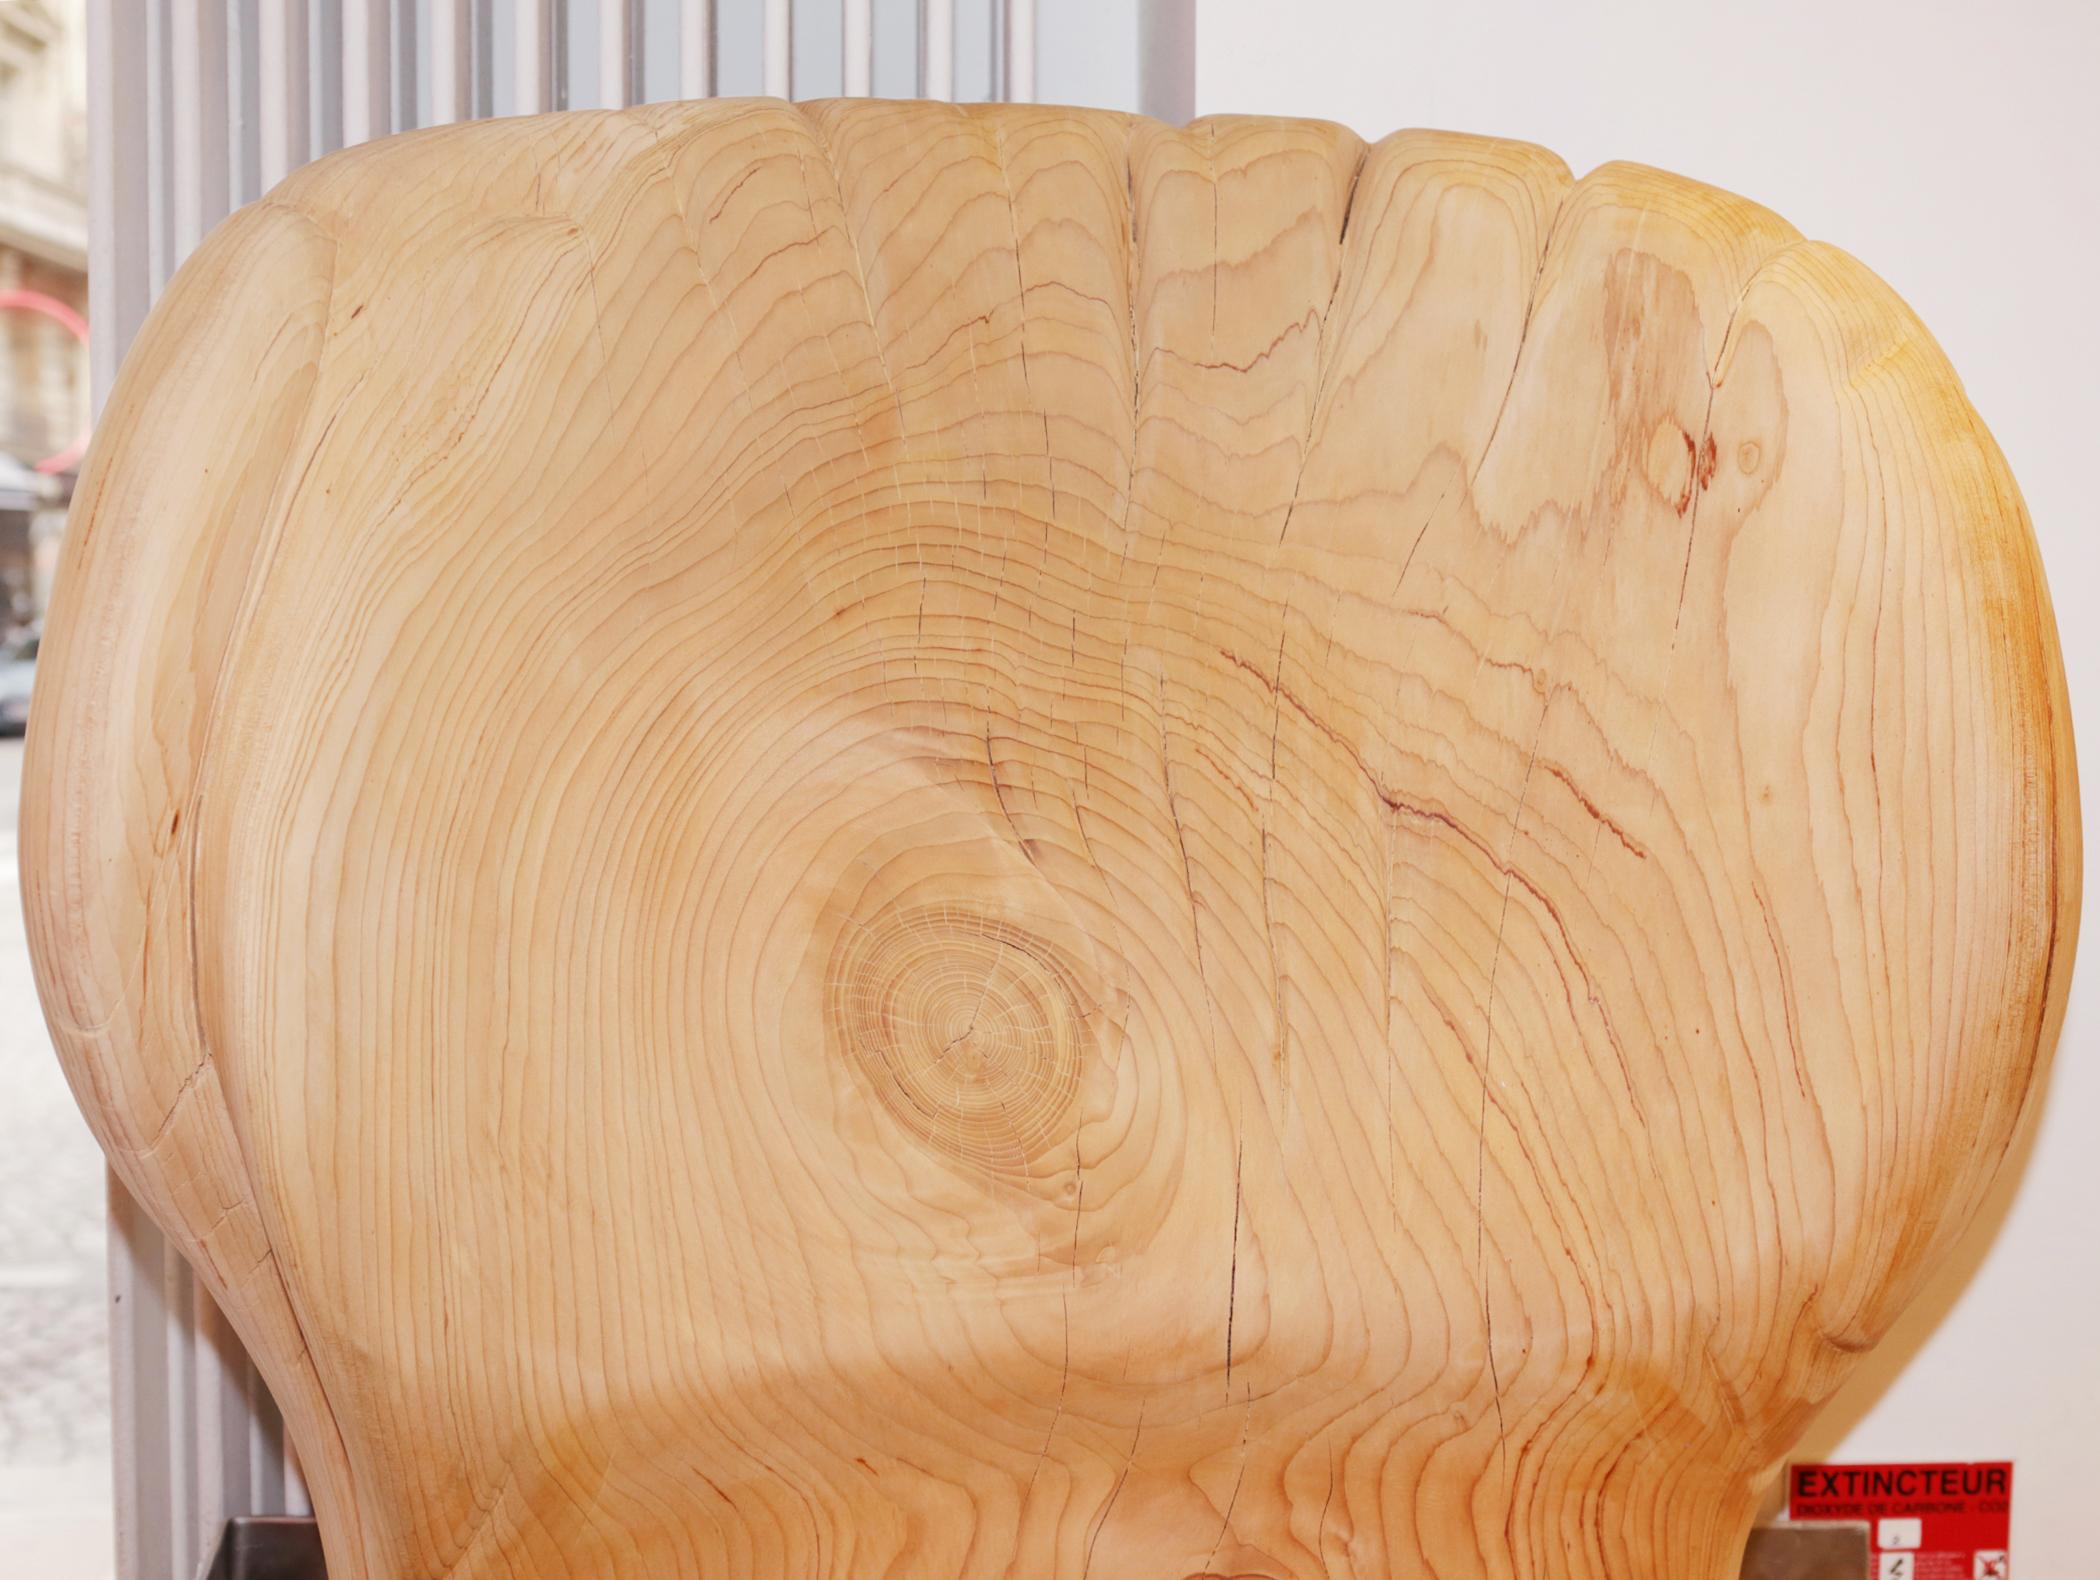 Hand-Carved Cedar B Throne in Solid Natural Cedar Wood